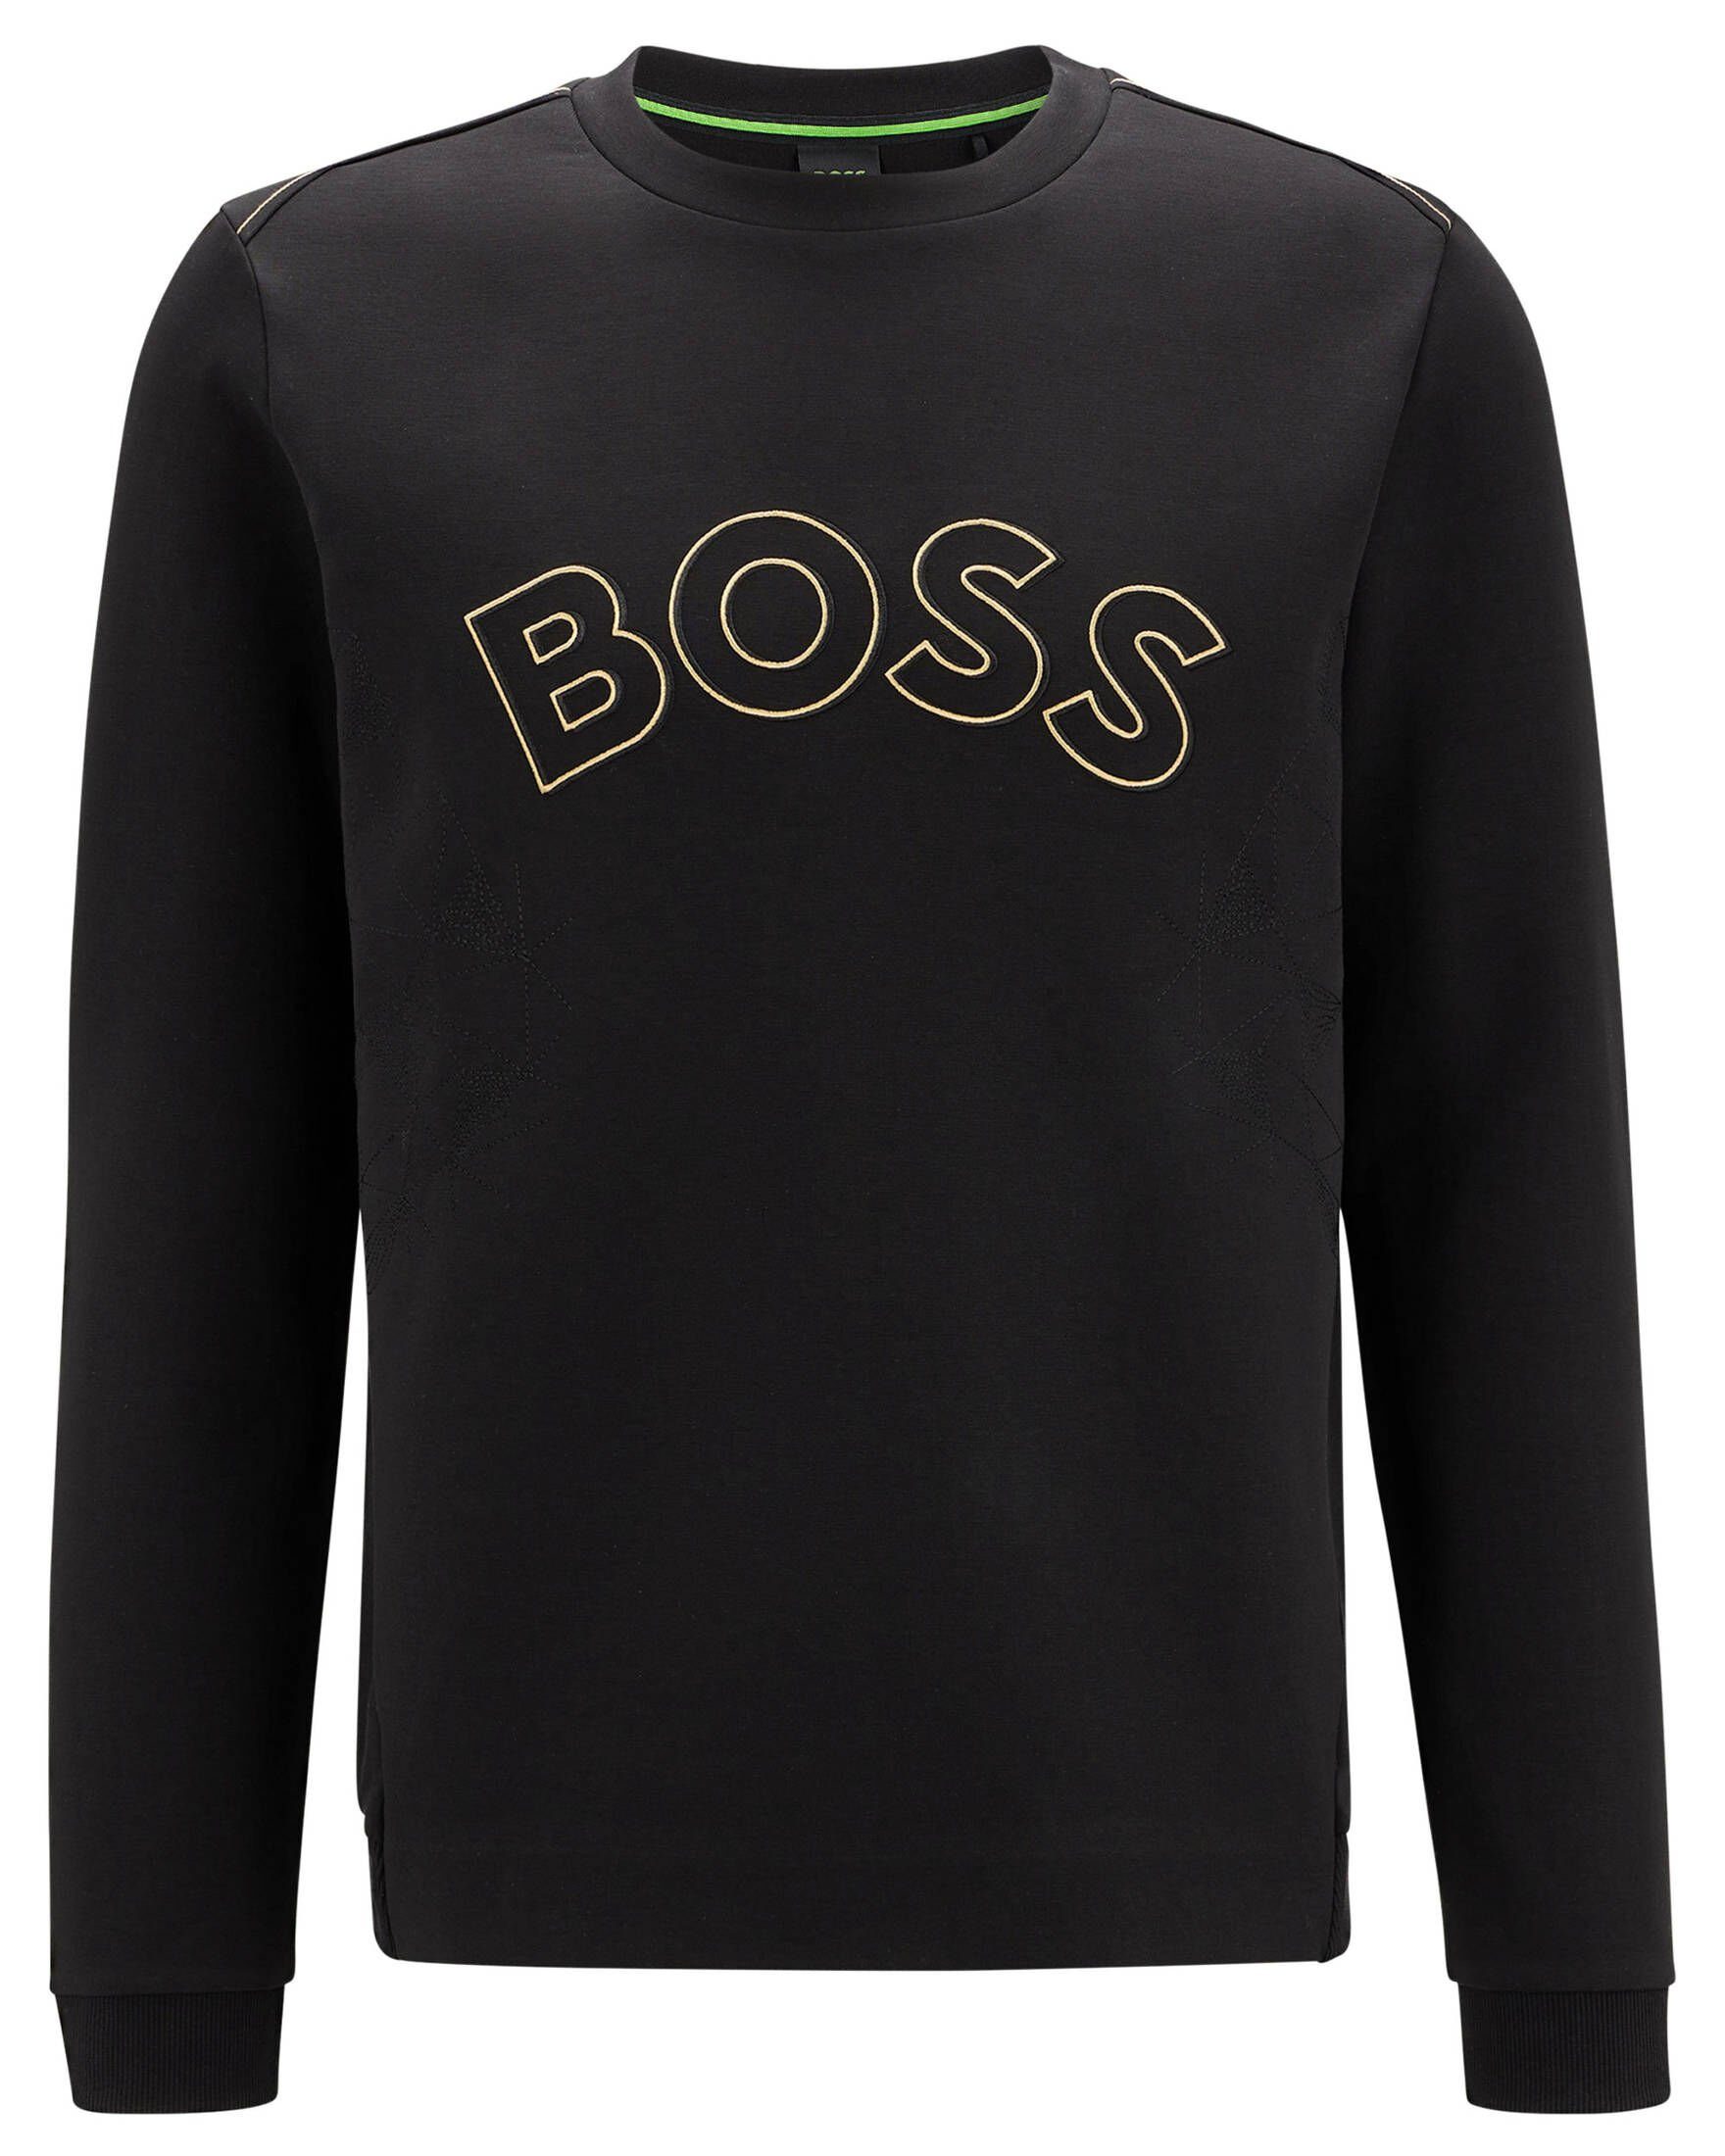 HUGO BOSS Herren Pullover online kaufen | OTTO